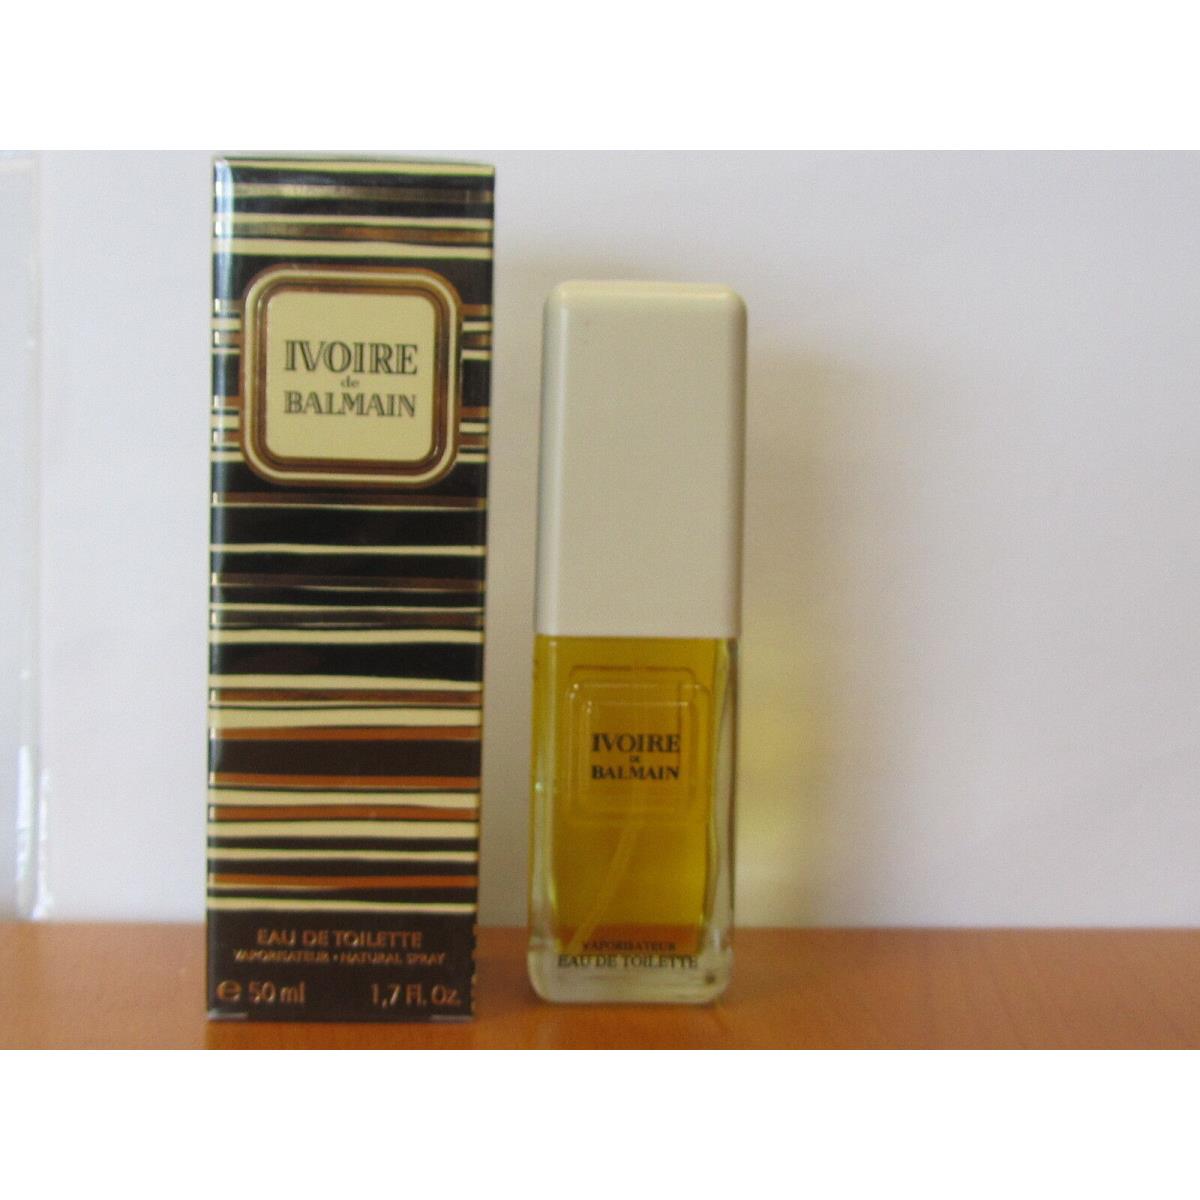 Ivoire de Balmain Perfume Women 1.7oz/ 50 ml Eau De Toilette Spray Rare